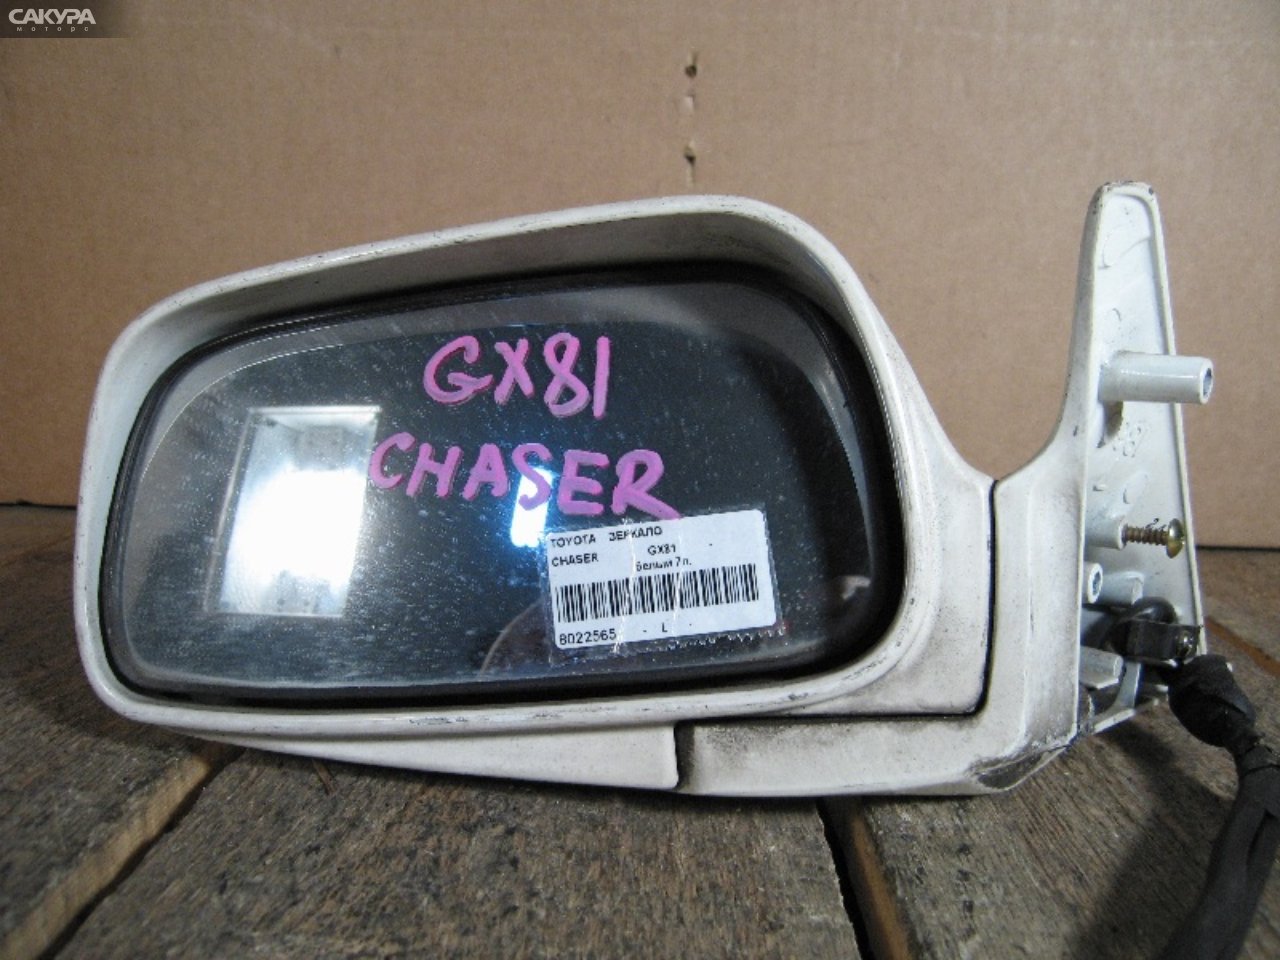 Зеркало боковое левое Toyota Chaser GX81: купить в Сакура Абакан.